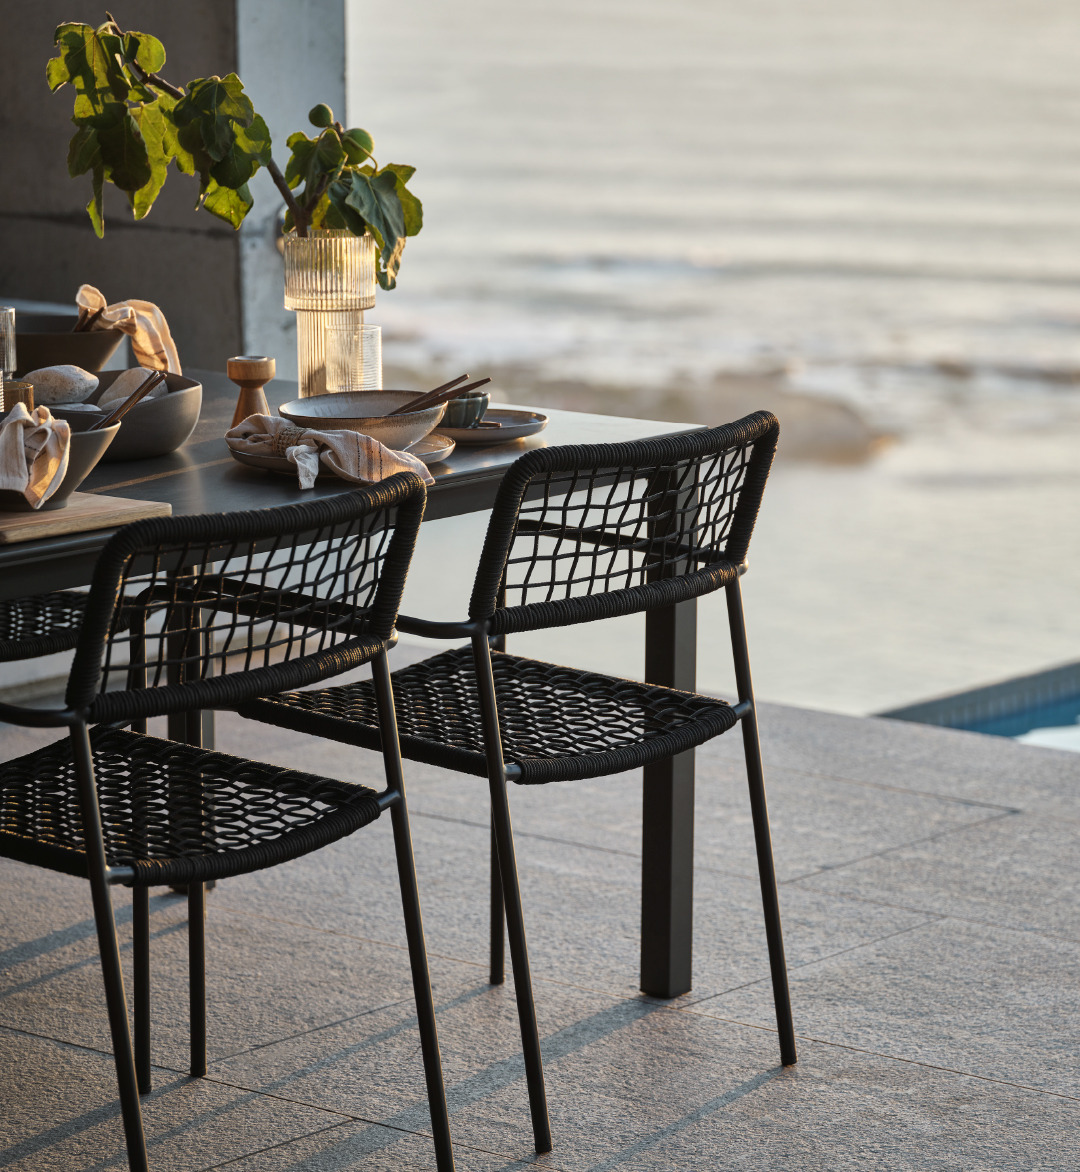 Čelične crne baštenske stolice uz crni baštenski stol na terasi